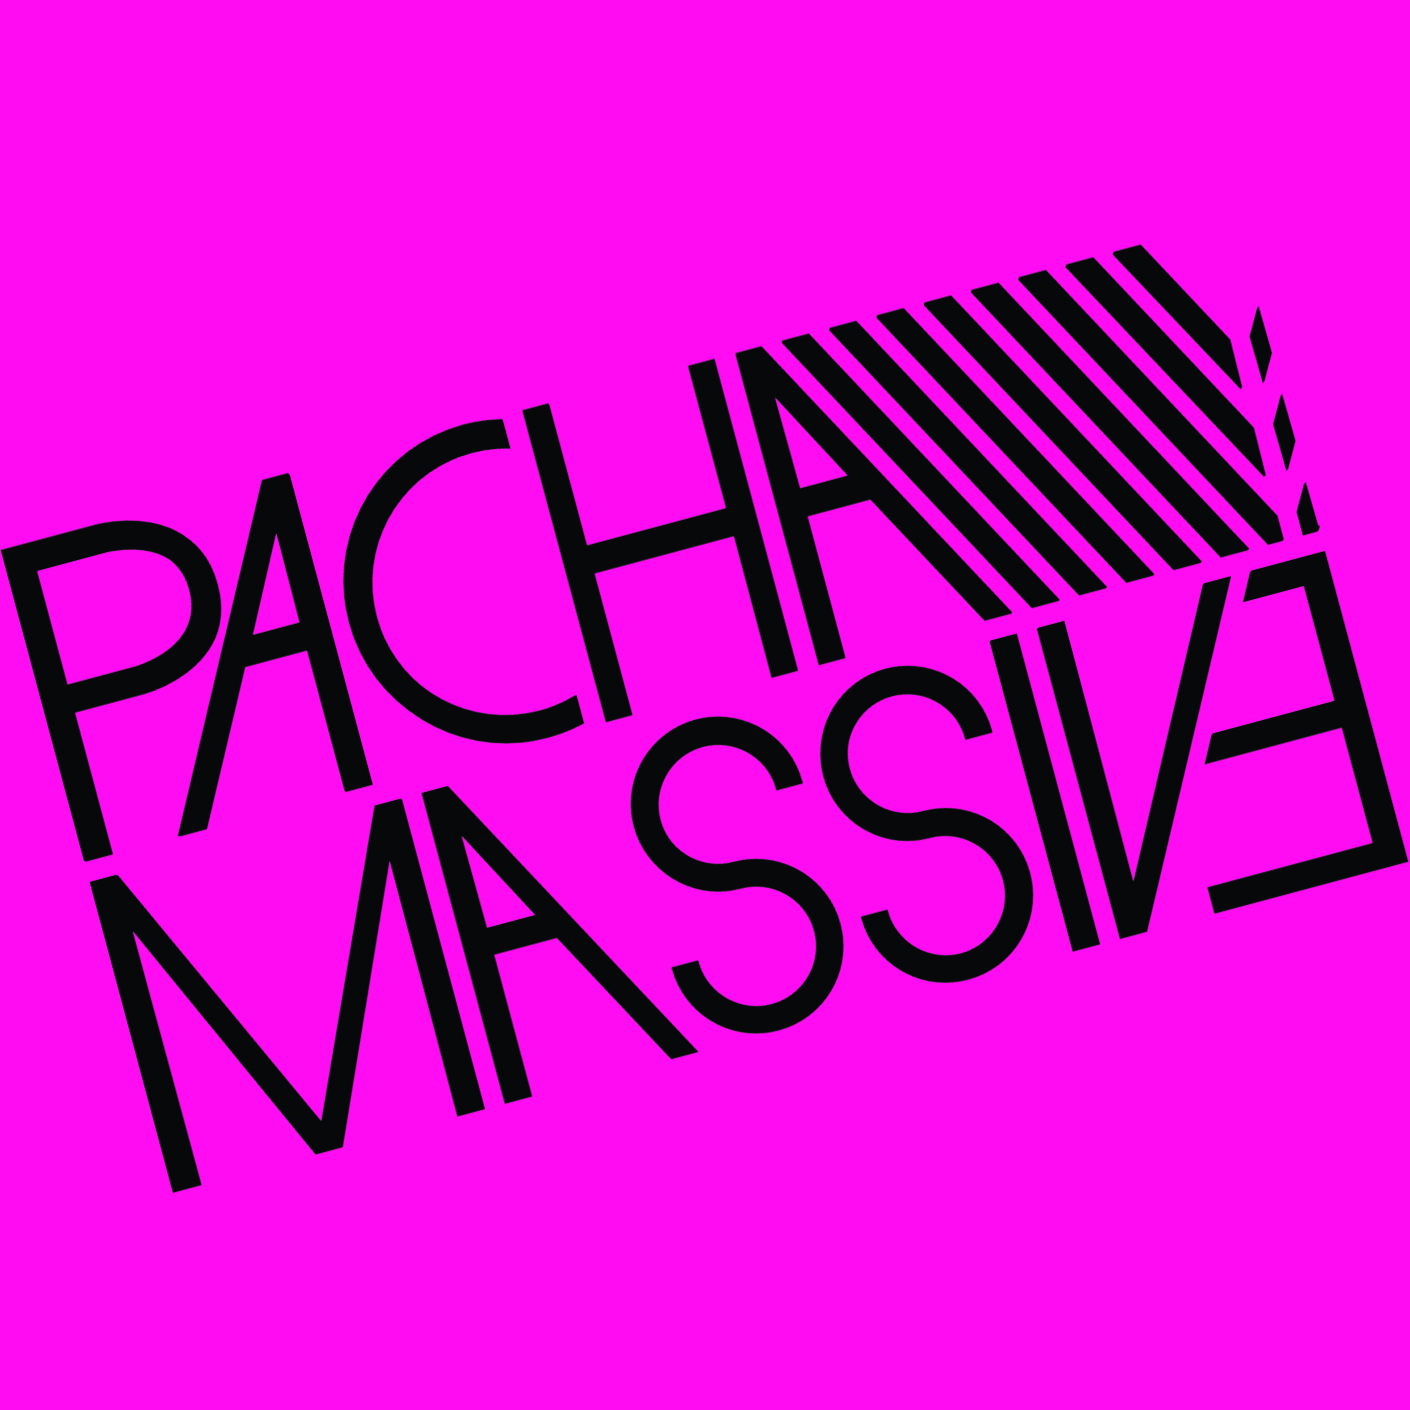 Pacha Massive _ Site work in progress